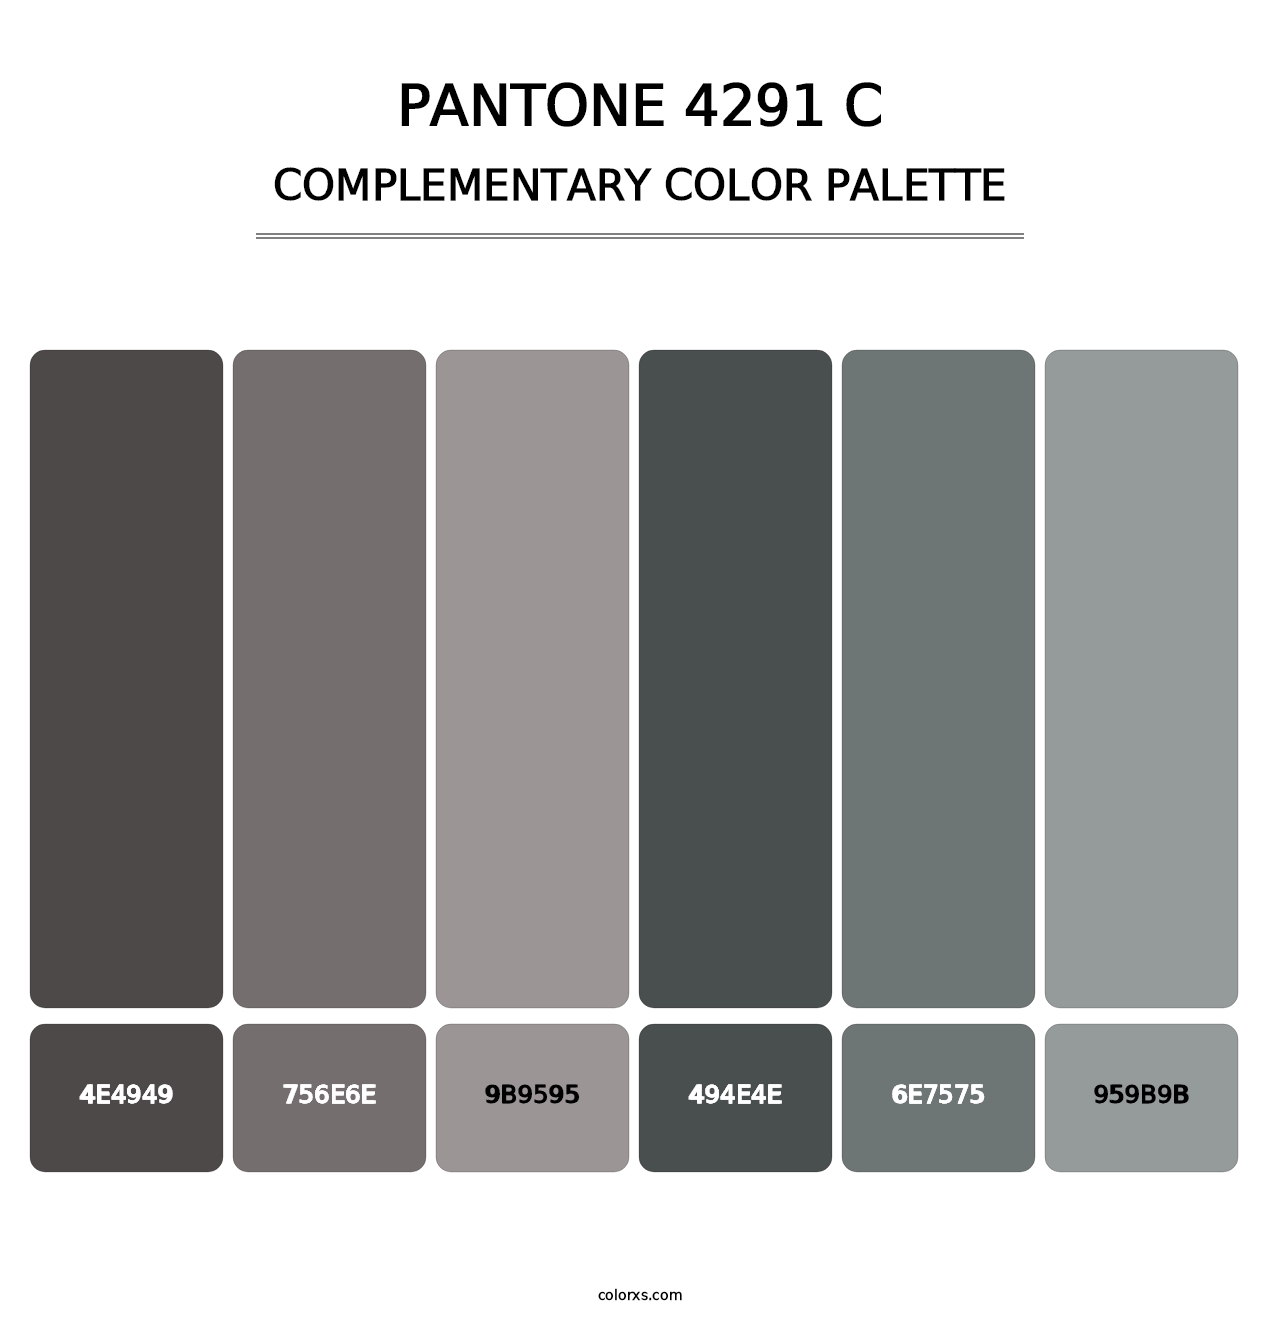 PANTONE 4291 C - Complementary Color Palette